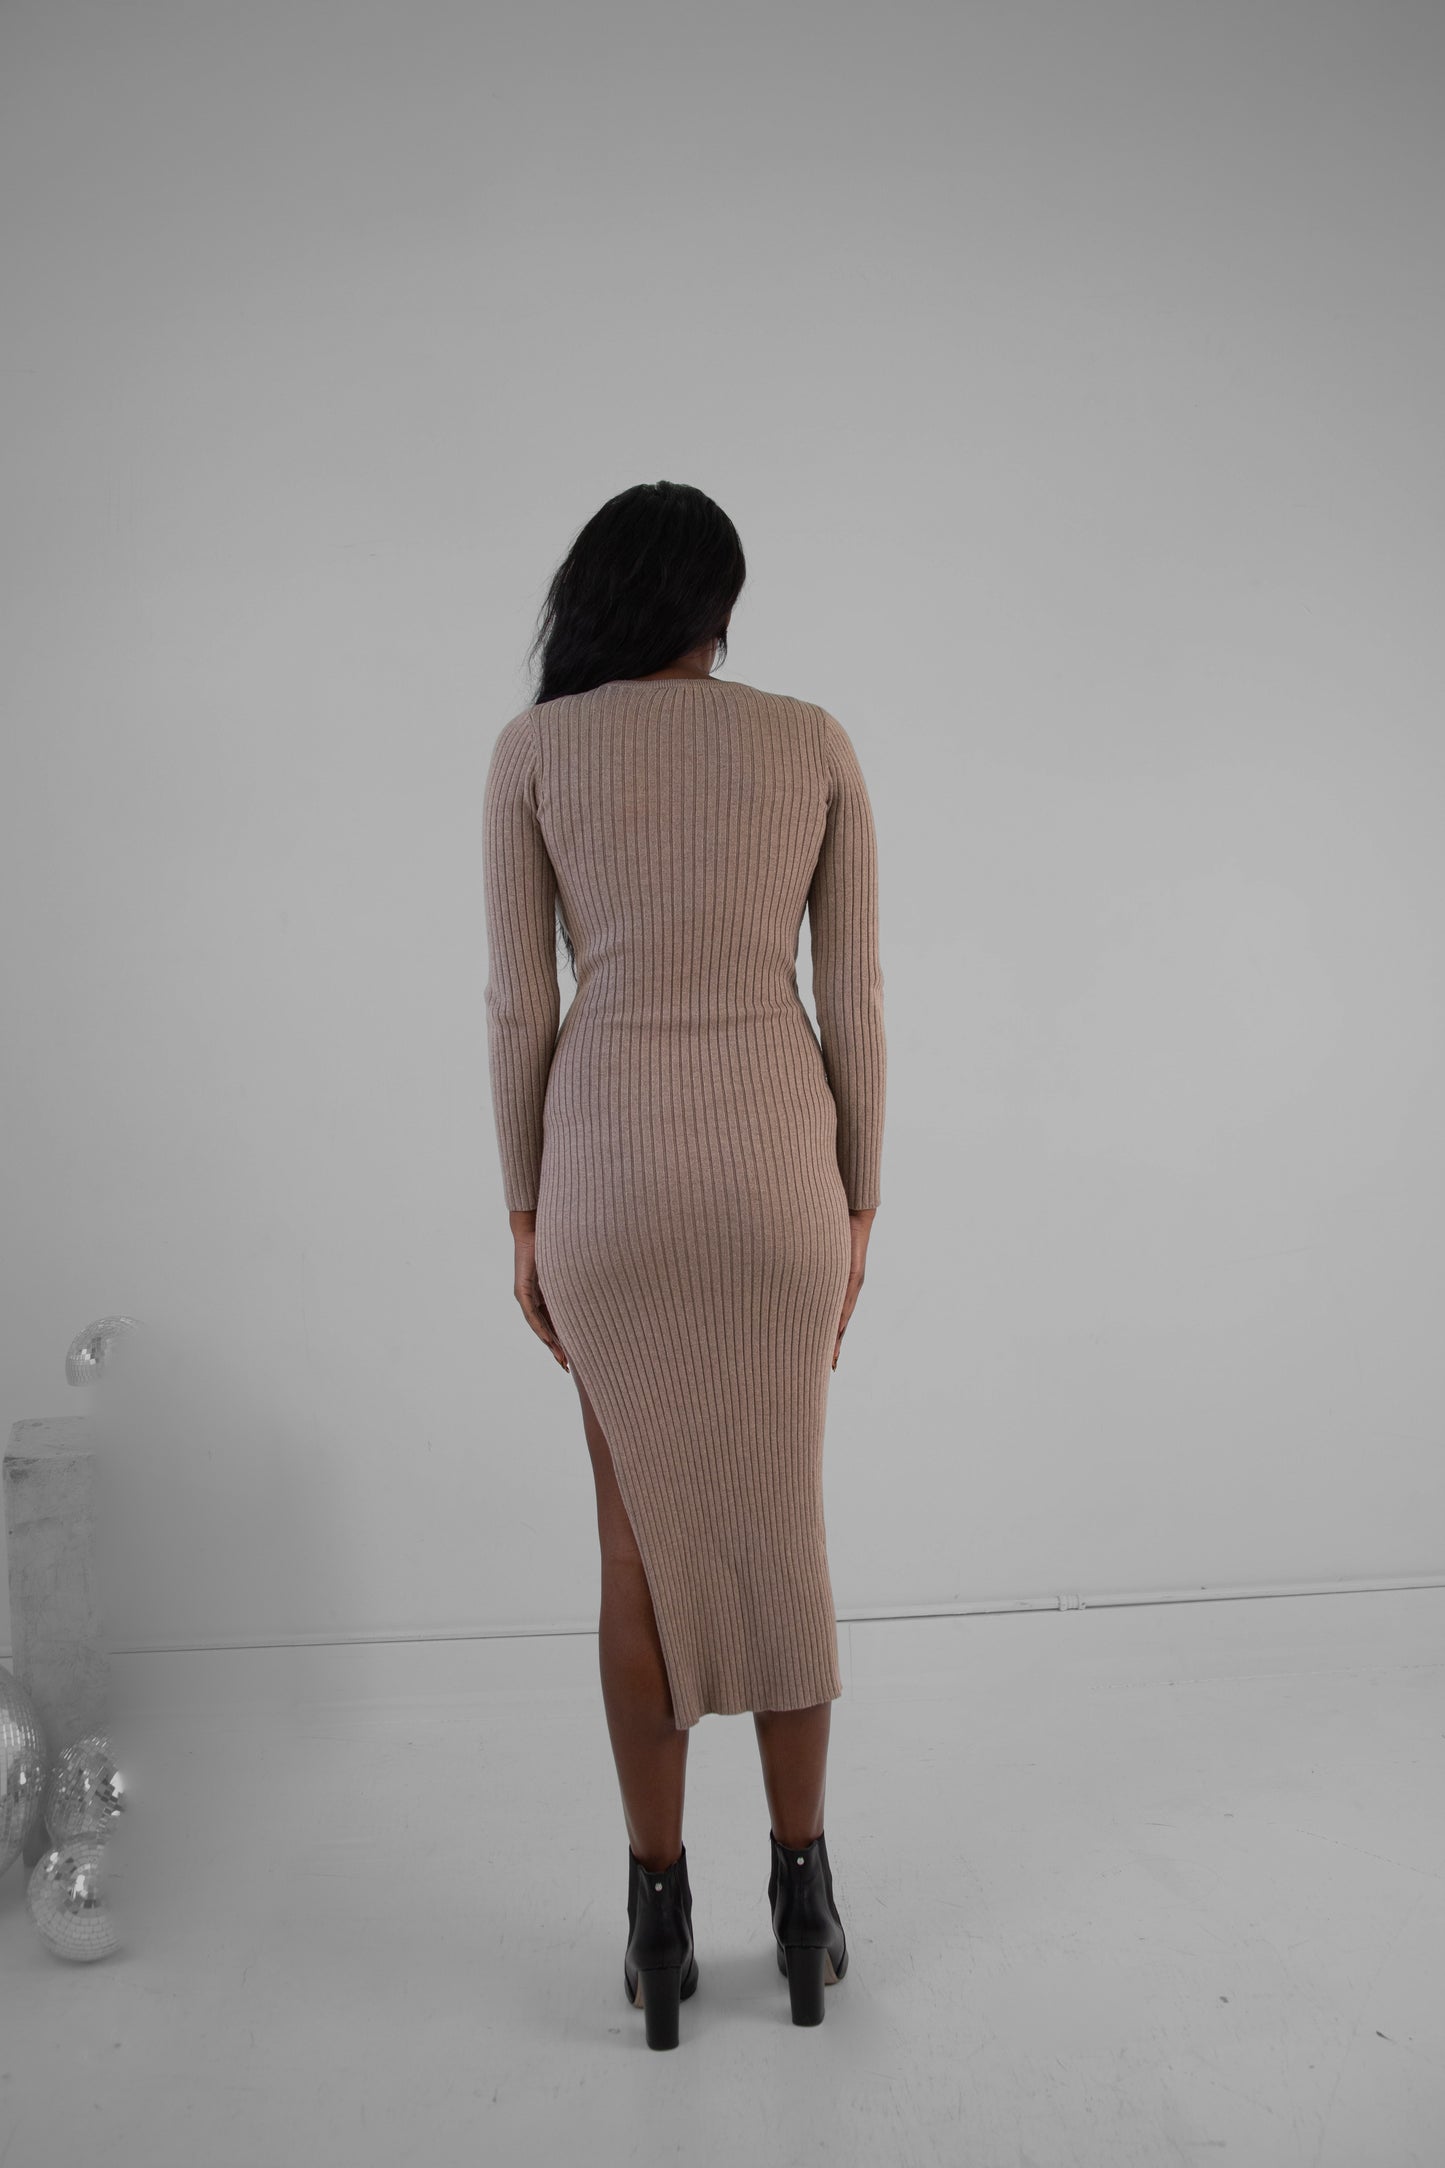 Naked Wardrobe "Bodycon Sweater" Long Dress in Dark Oatmeal (Tan) - Size Medium